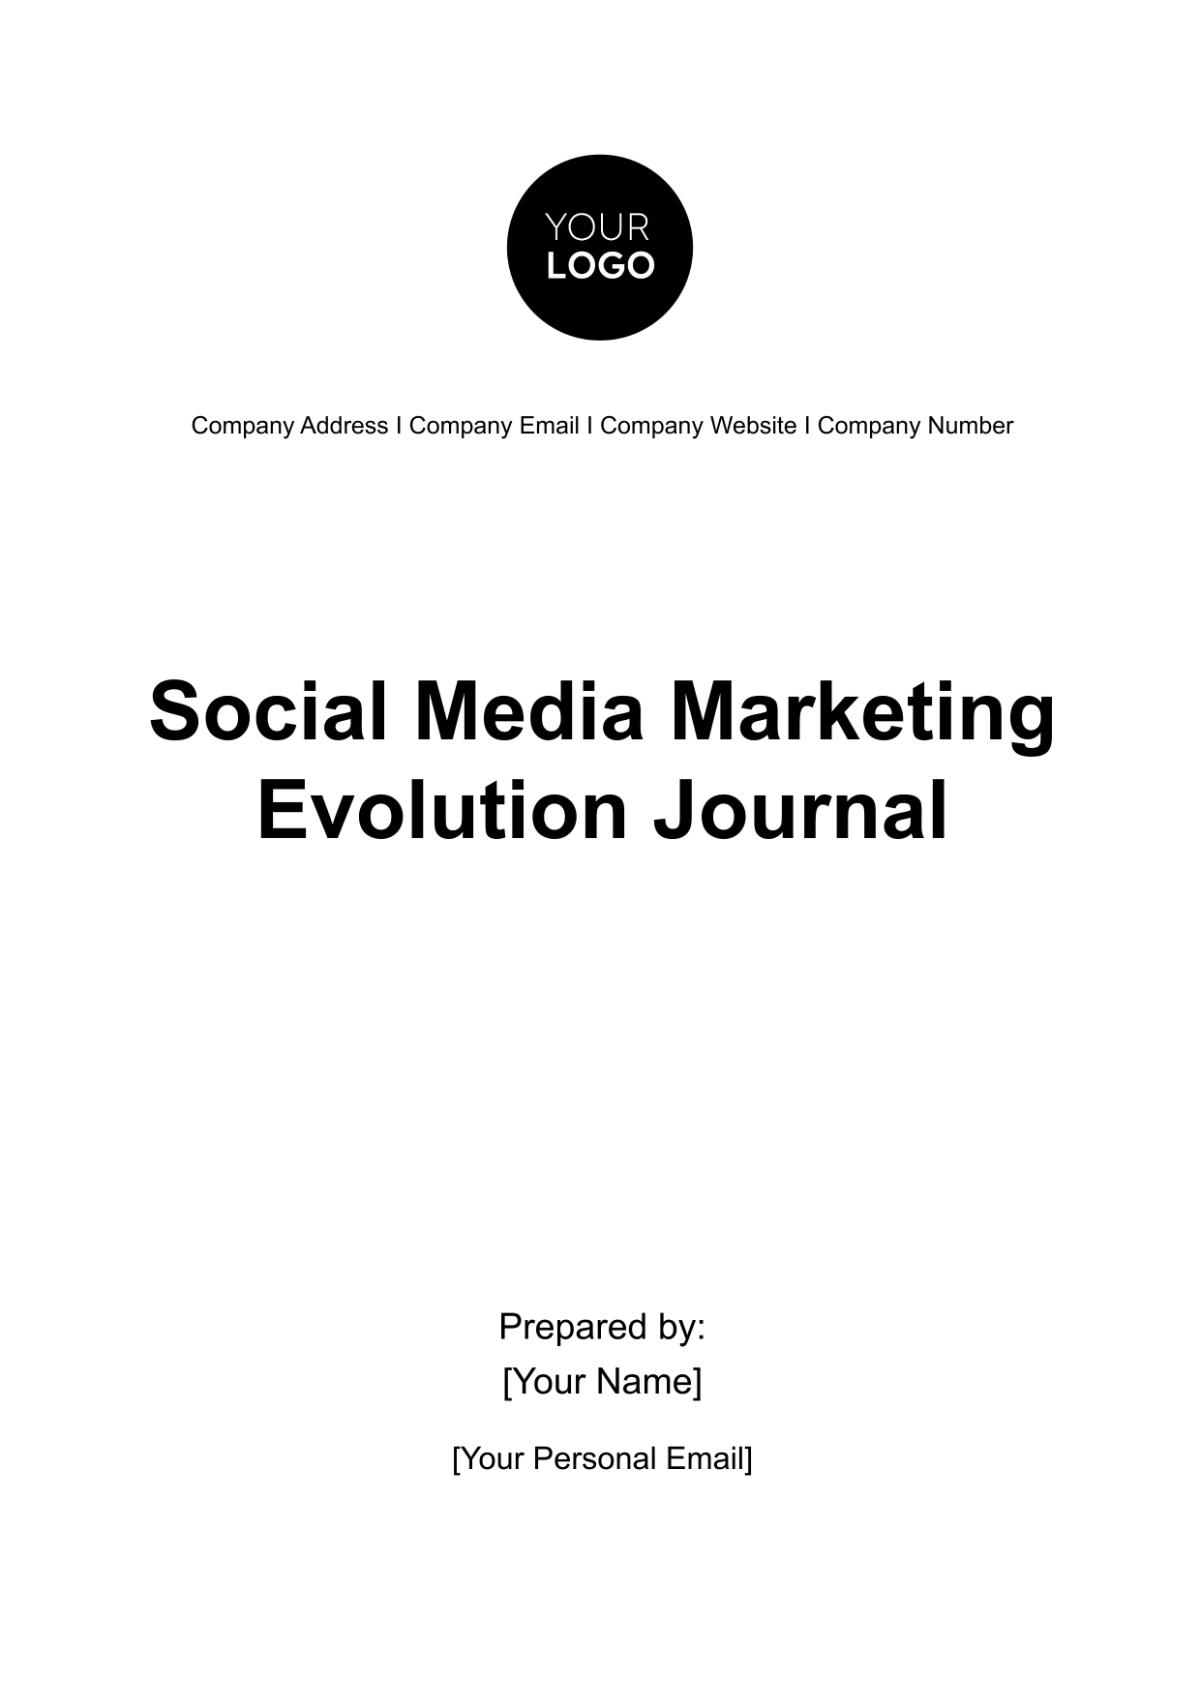 Social Media Marketing Evolution Journal Template